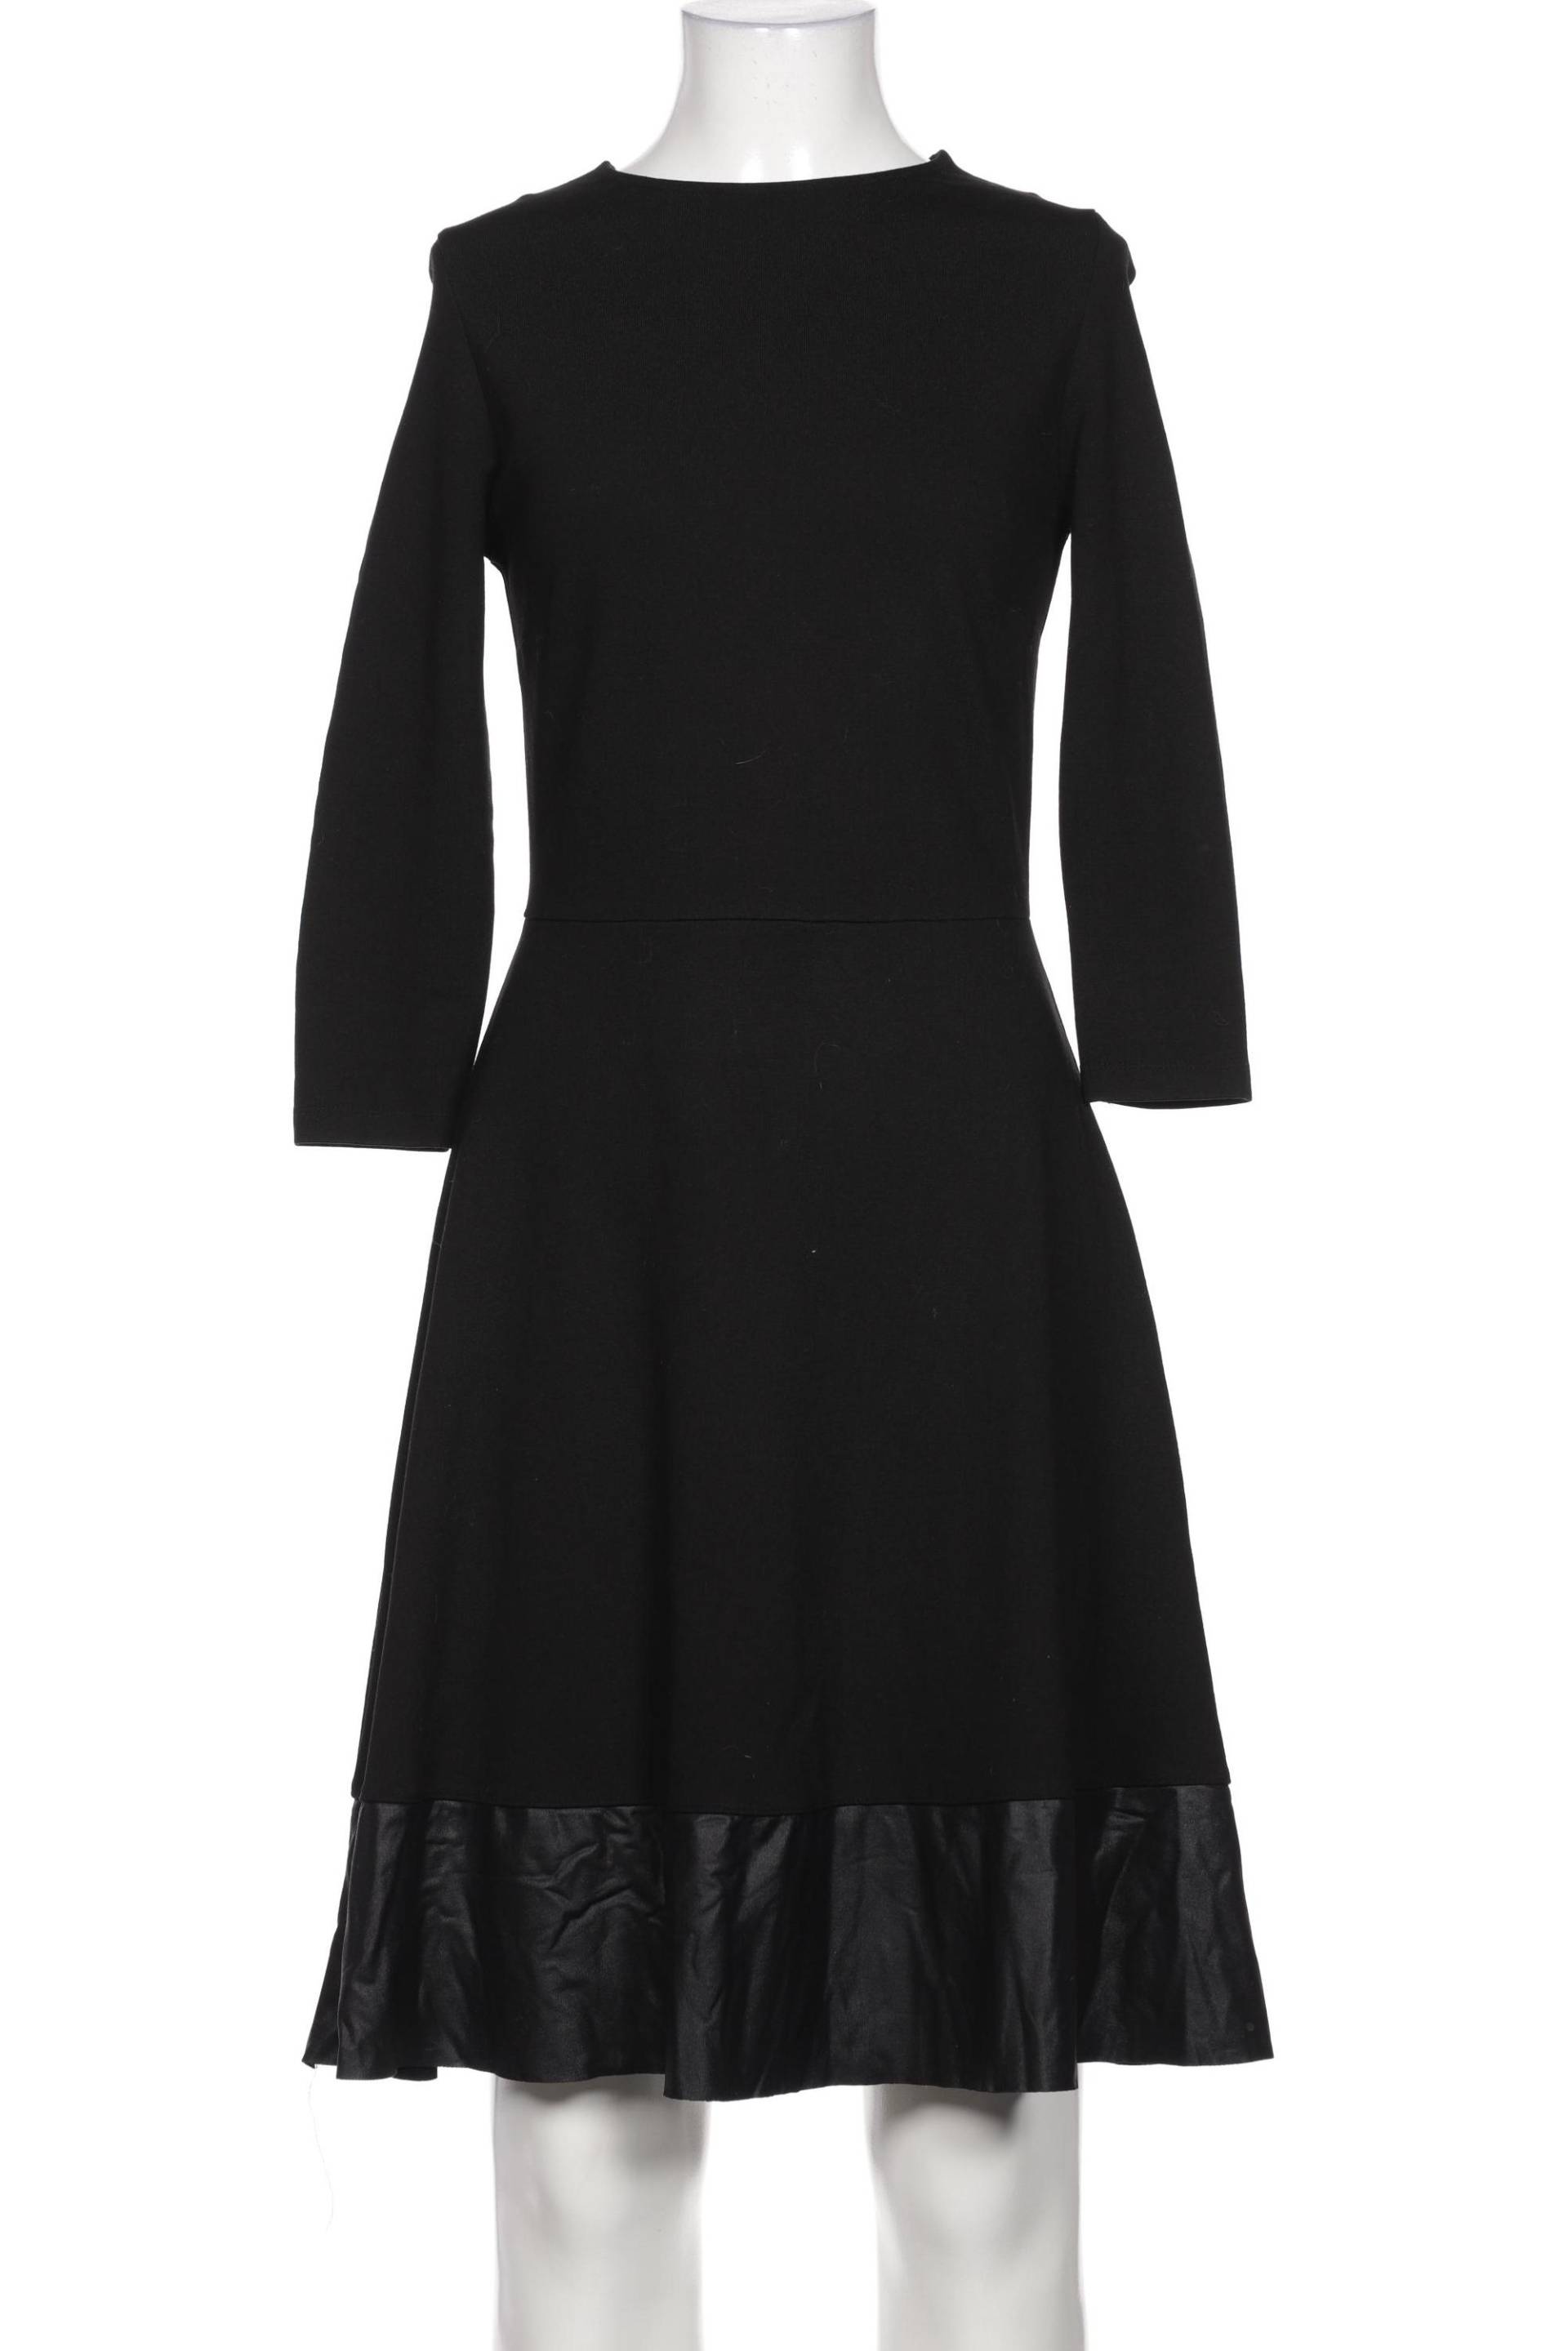 Kiomi Damen Kleid, schwarz von Kiomi